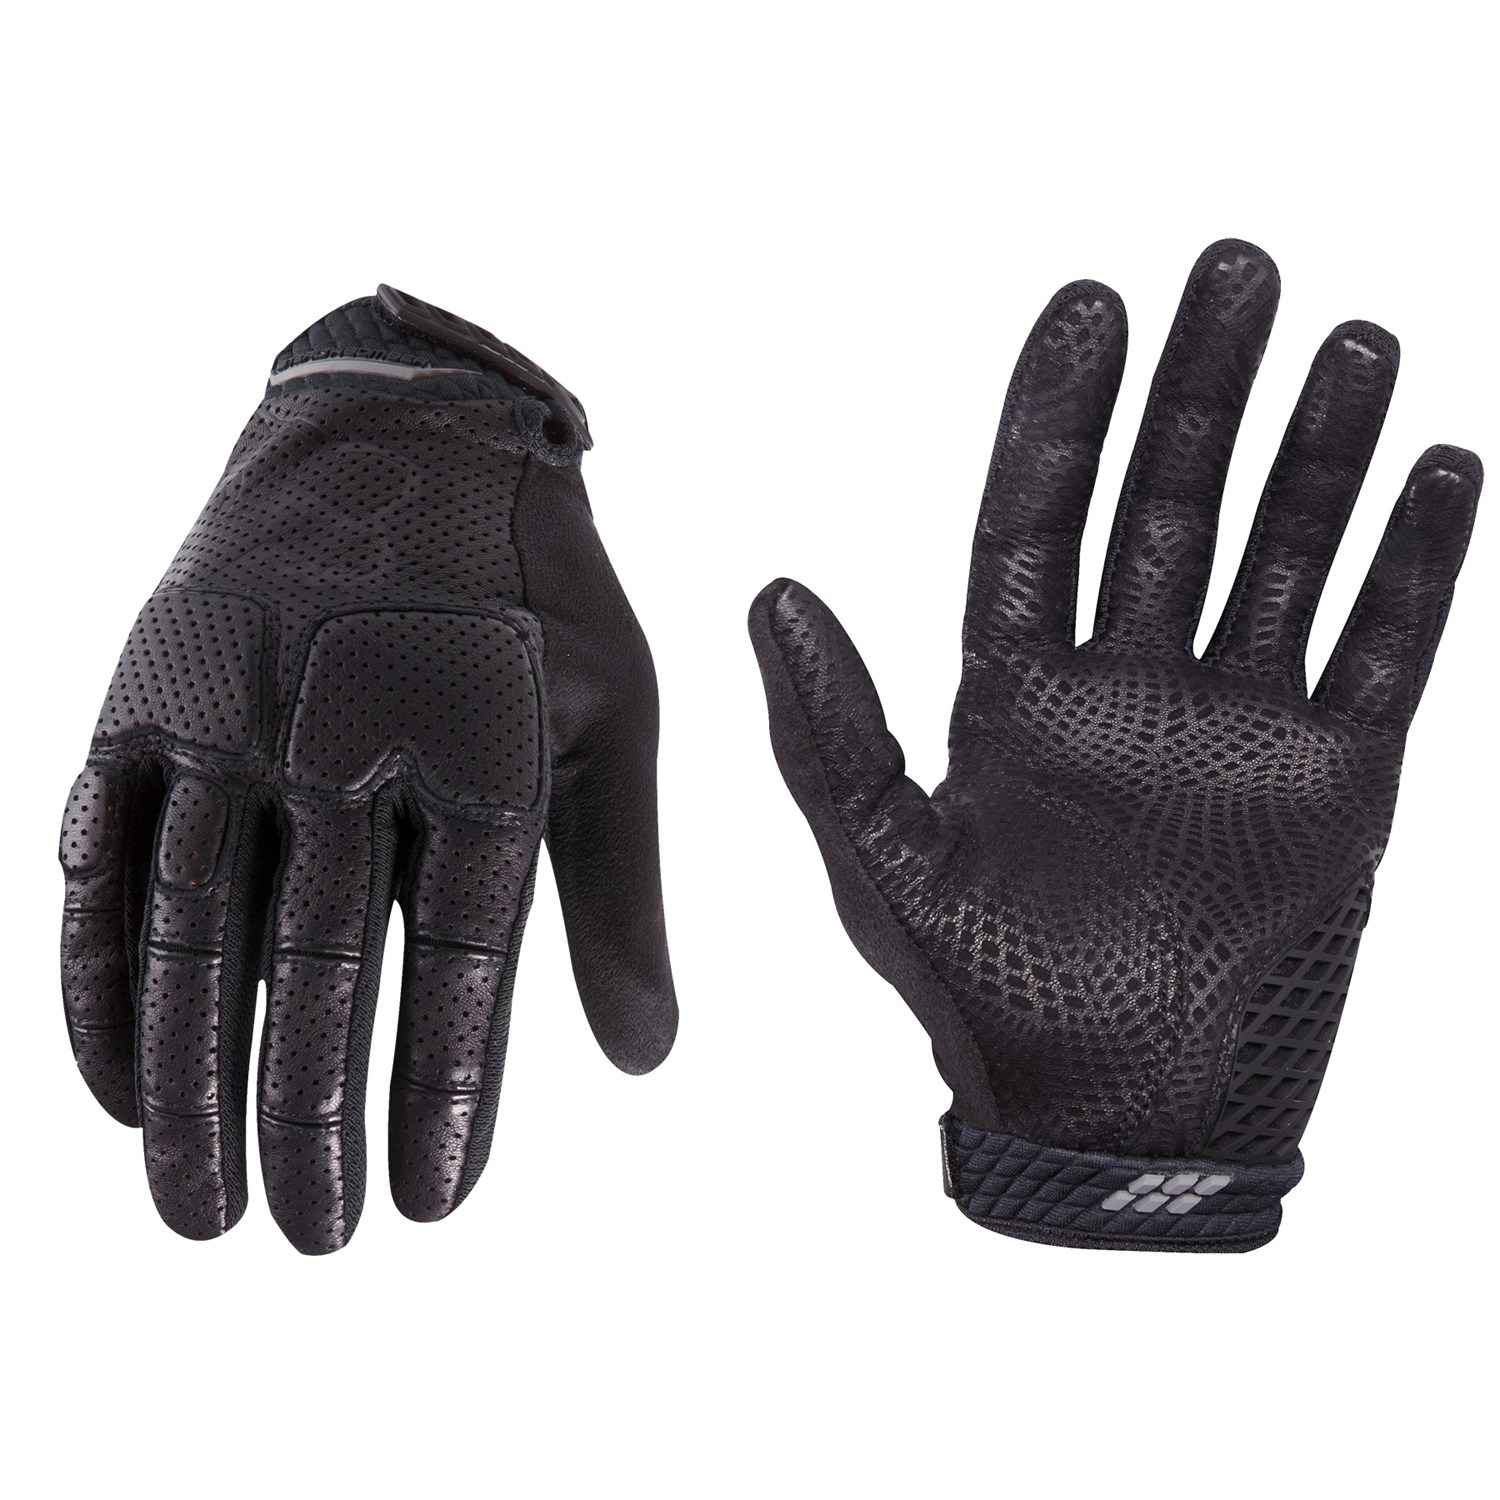 1390317079_3158773_suriyage_fox-racing-stealth-bomber-mountain-bike-gloves-for-men-and-women-in-black~p~5352n_01~1500.3.jpg